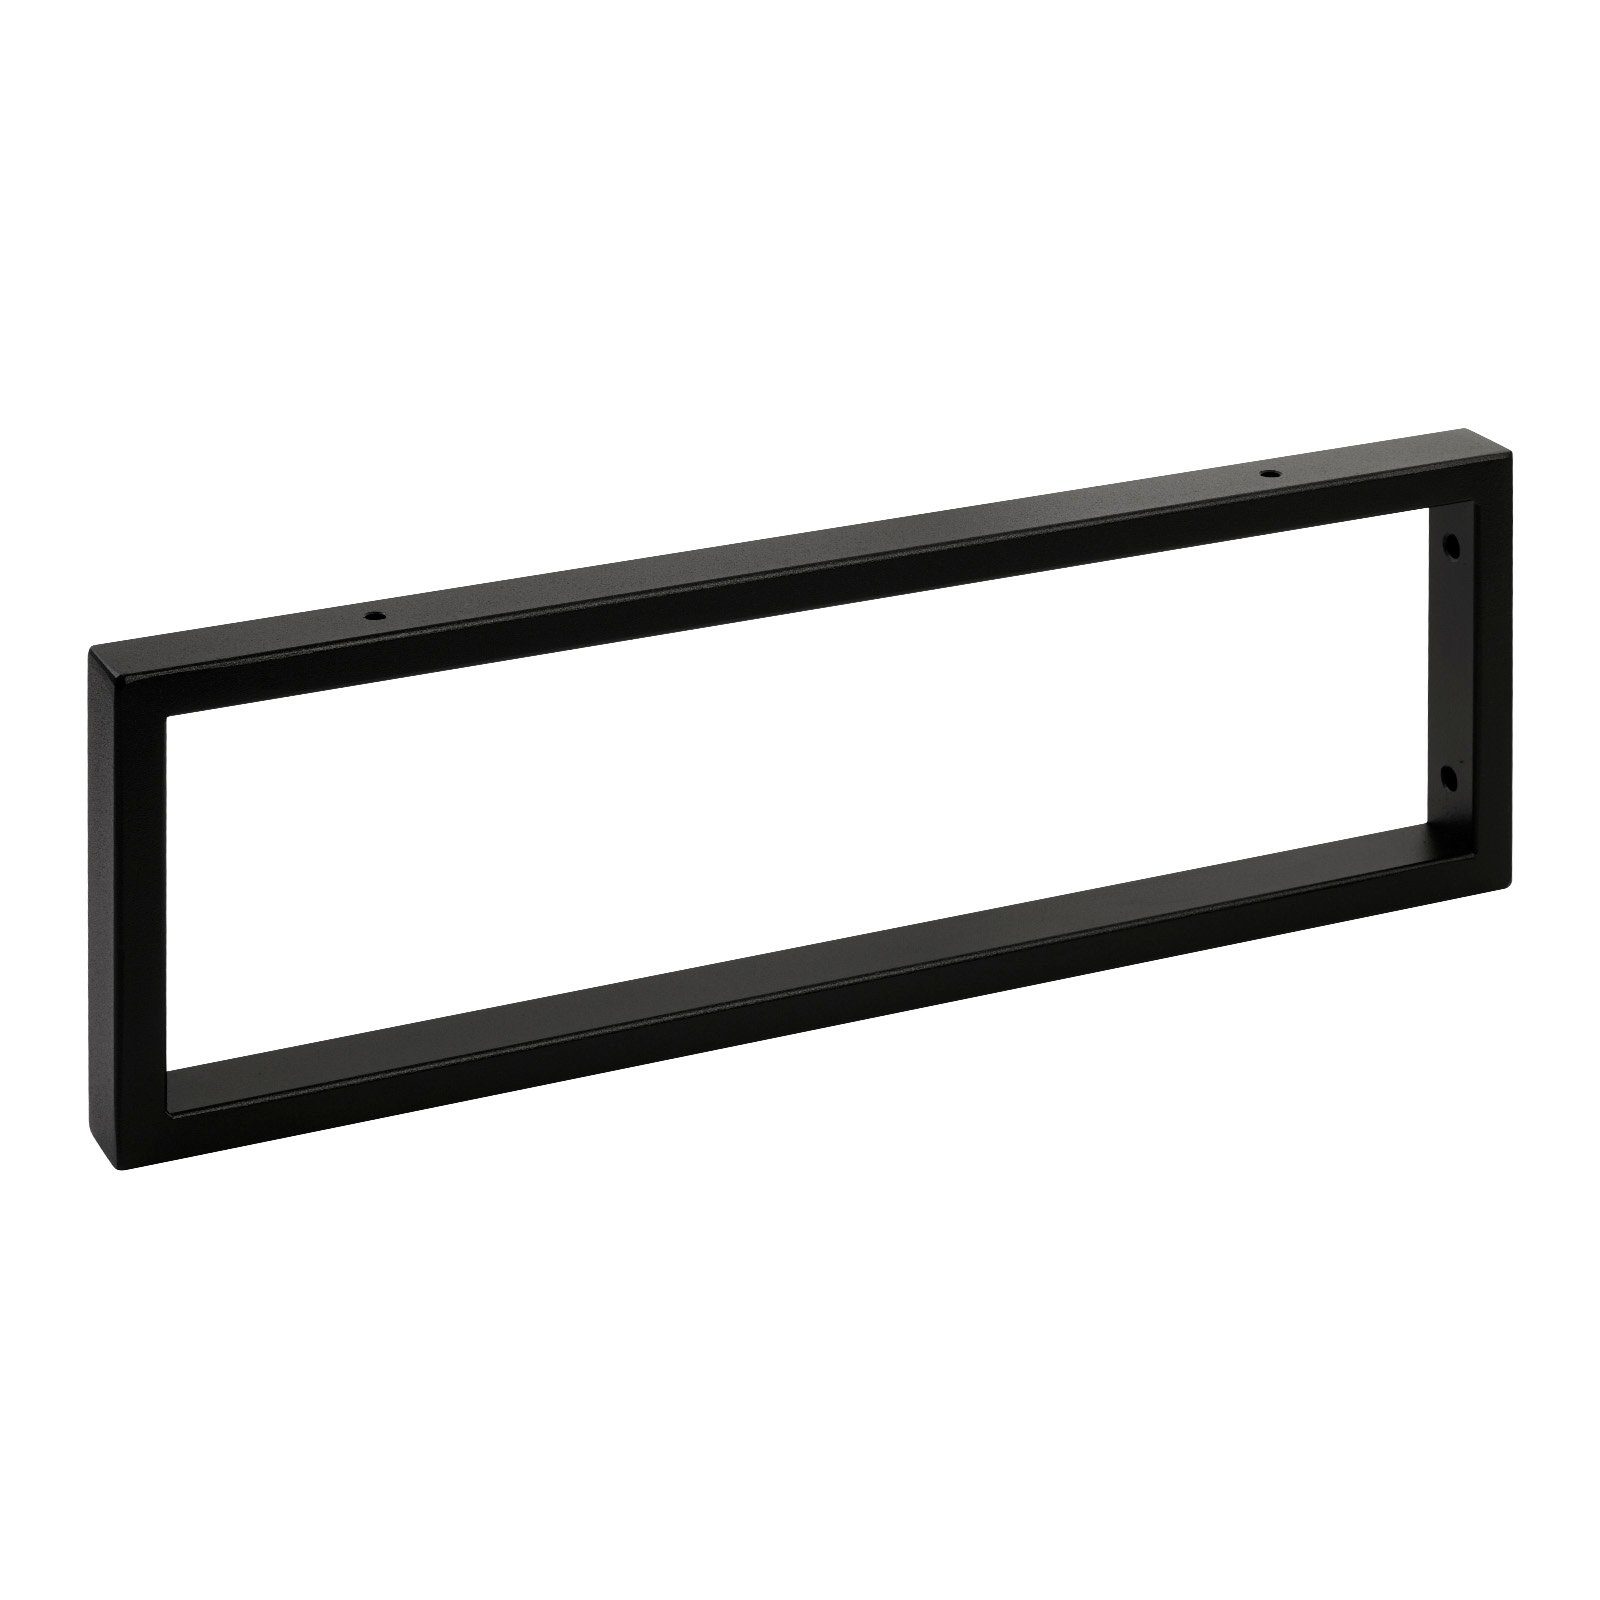 SO-TECH® Wandregalhalter Waschtischkonsole Wandkonsole, 1-tlg., WK450 rechteckig 450 x 150 mm, Stahl, schwarz matt